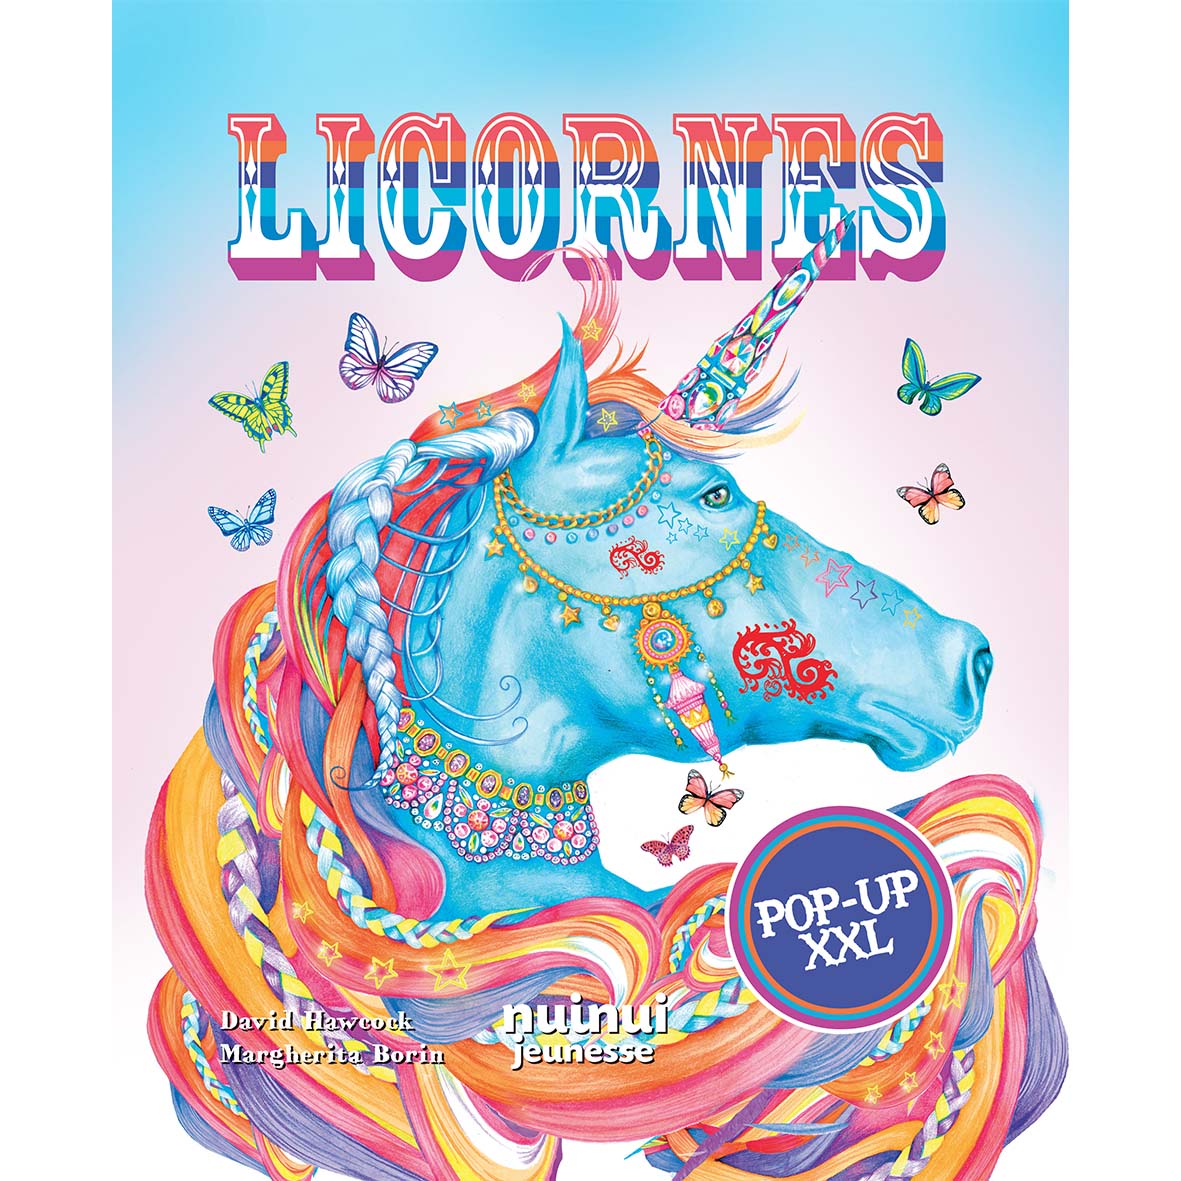 Pop-up XXL - Licornes